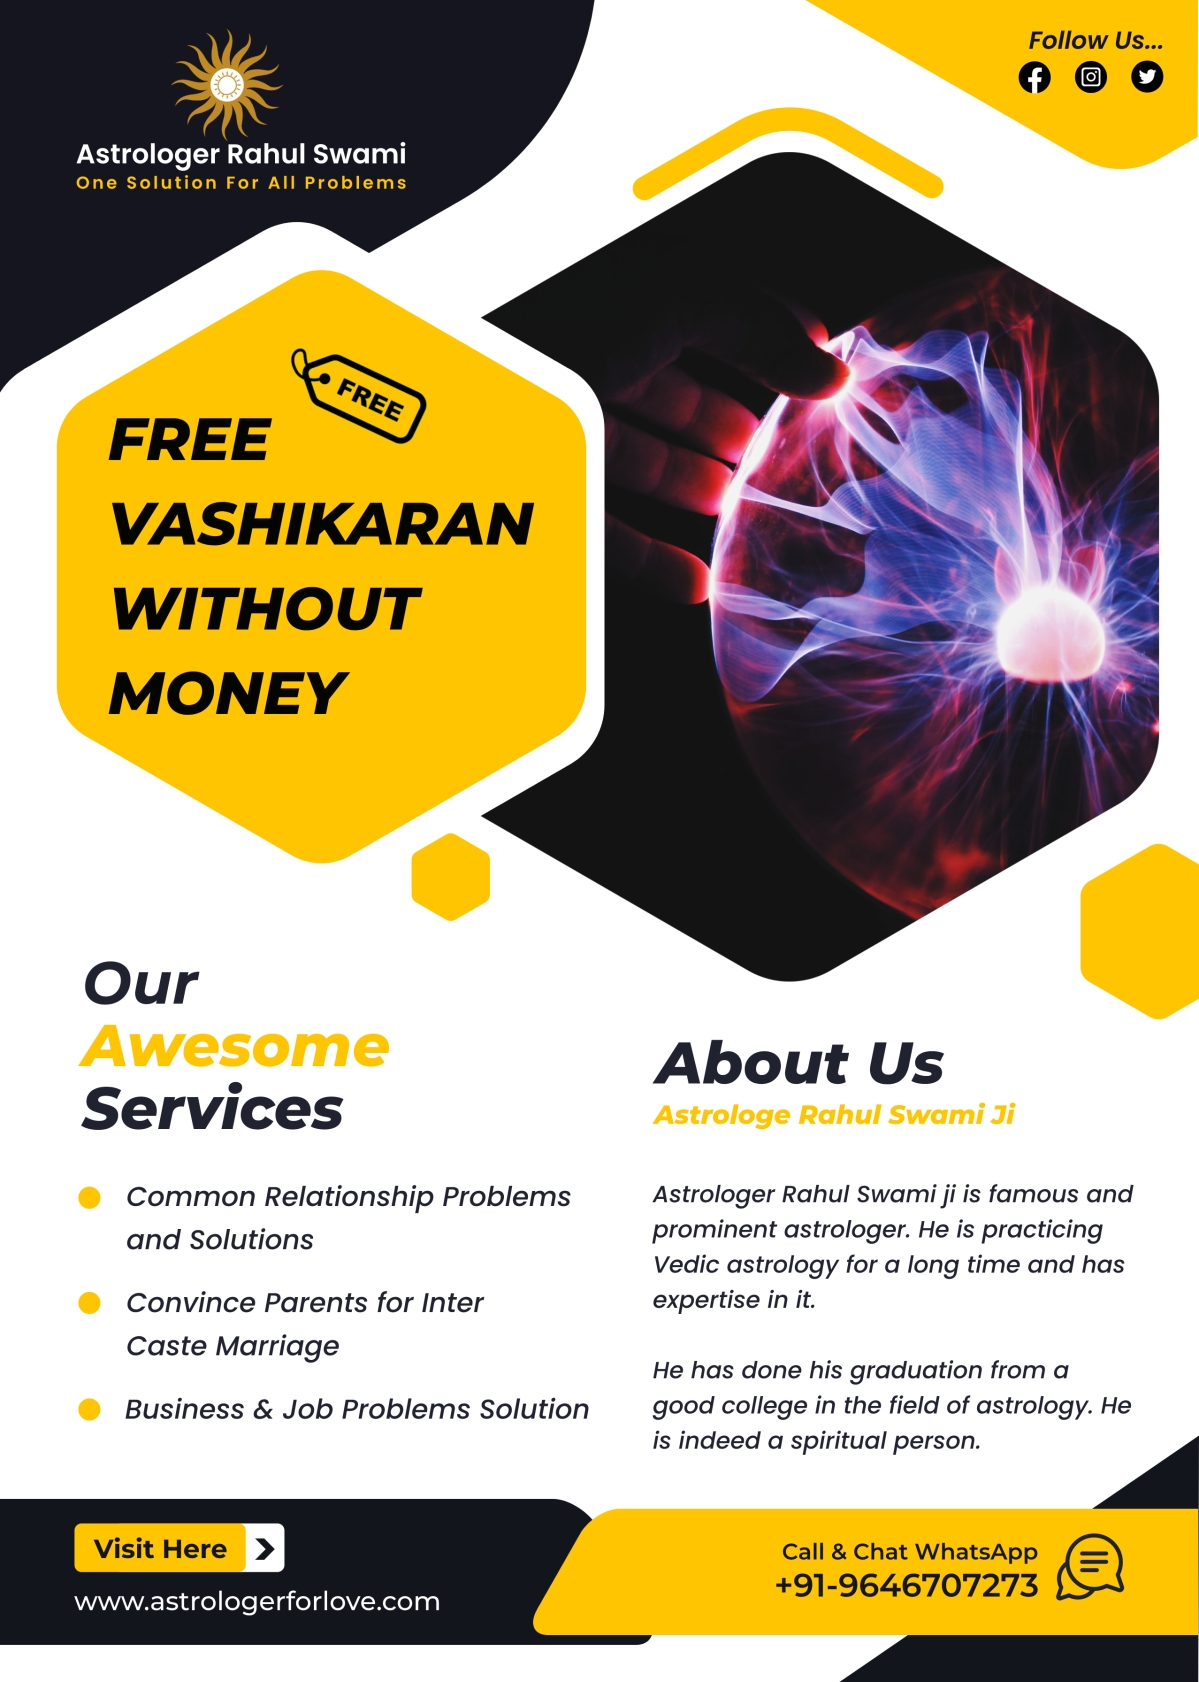 Free of cost Vashikaran mantra